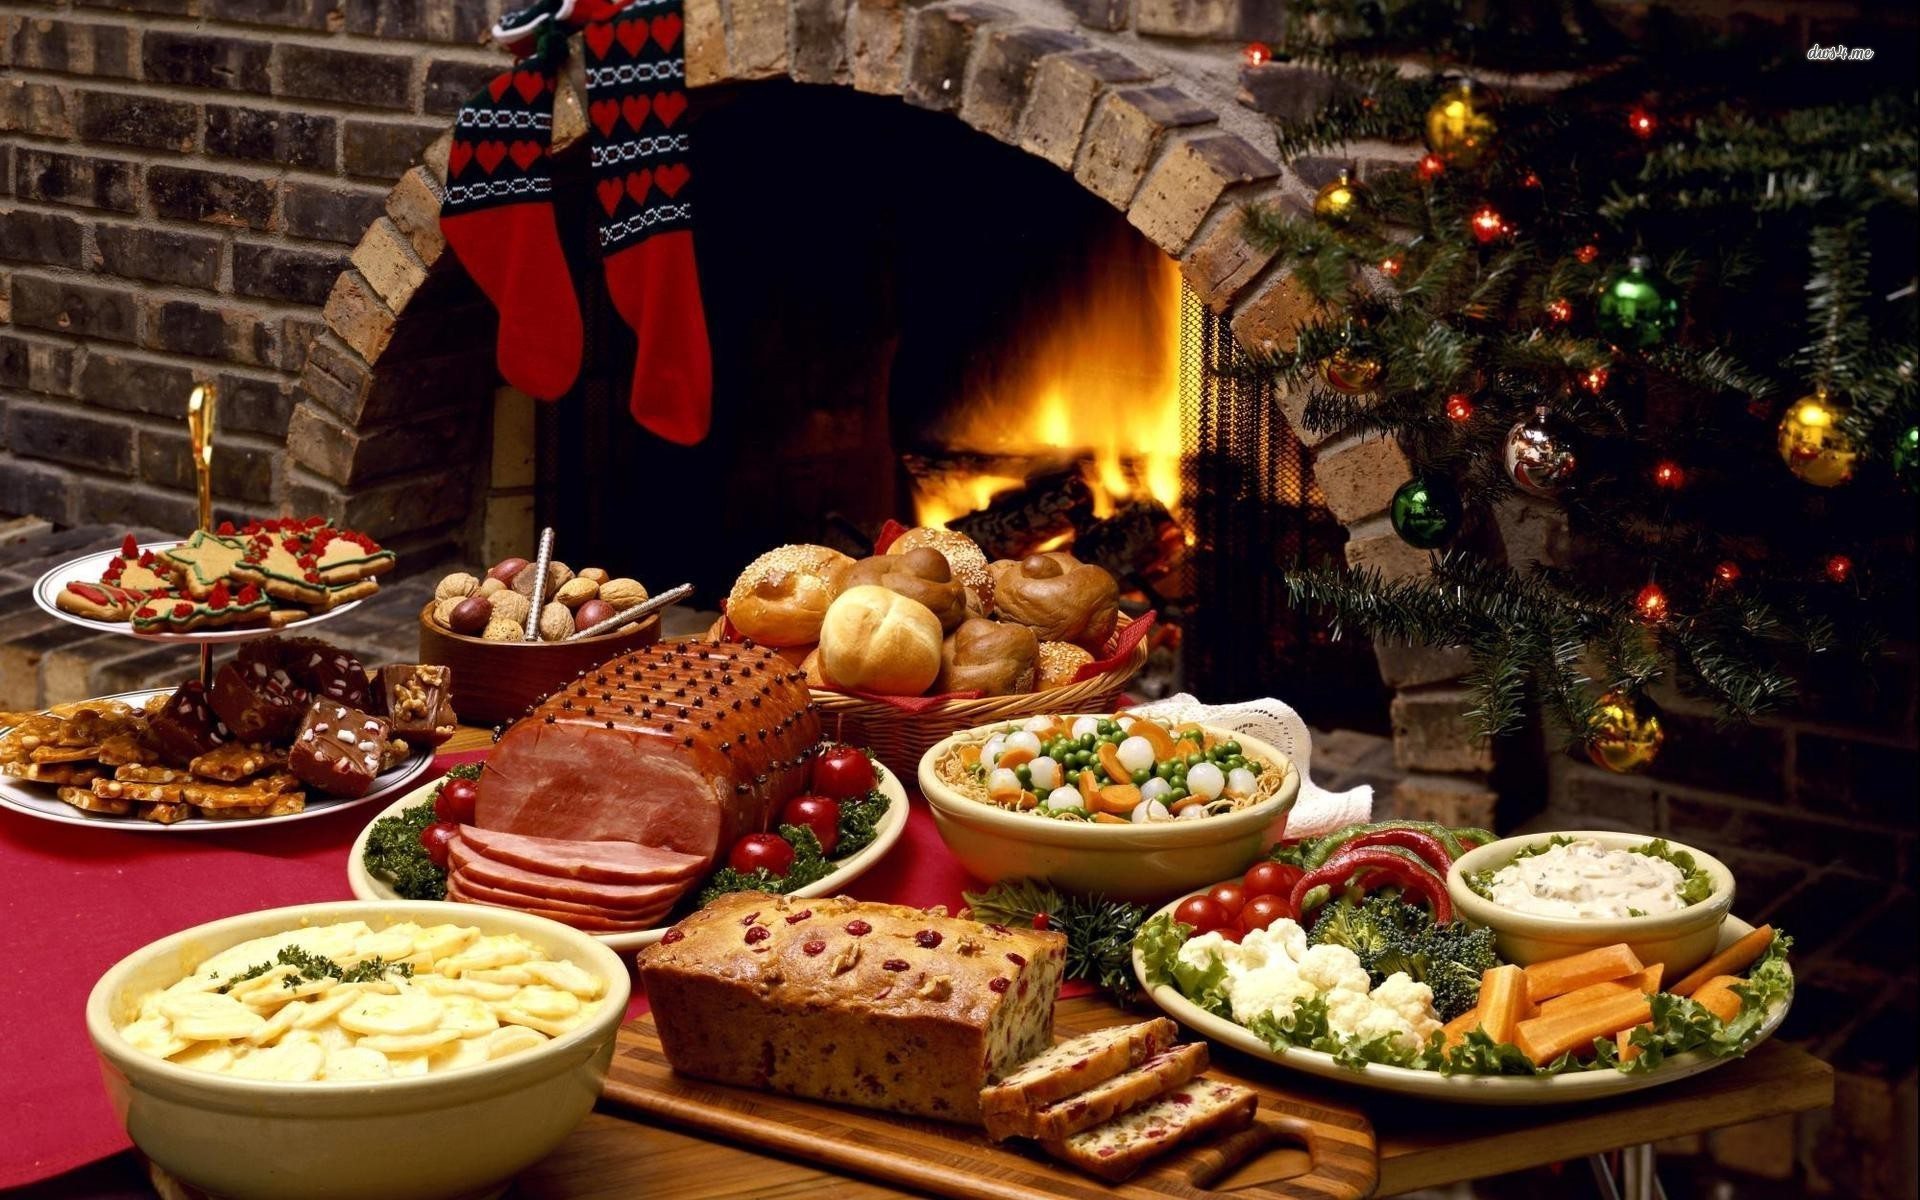 Top 8 Christmas Activities London - Try Amazing British Christmas Food